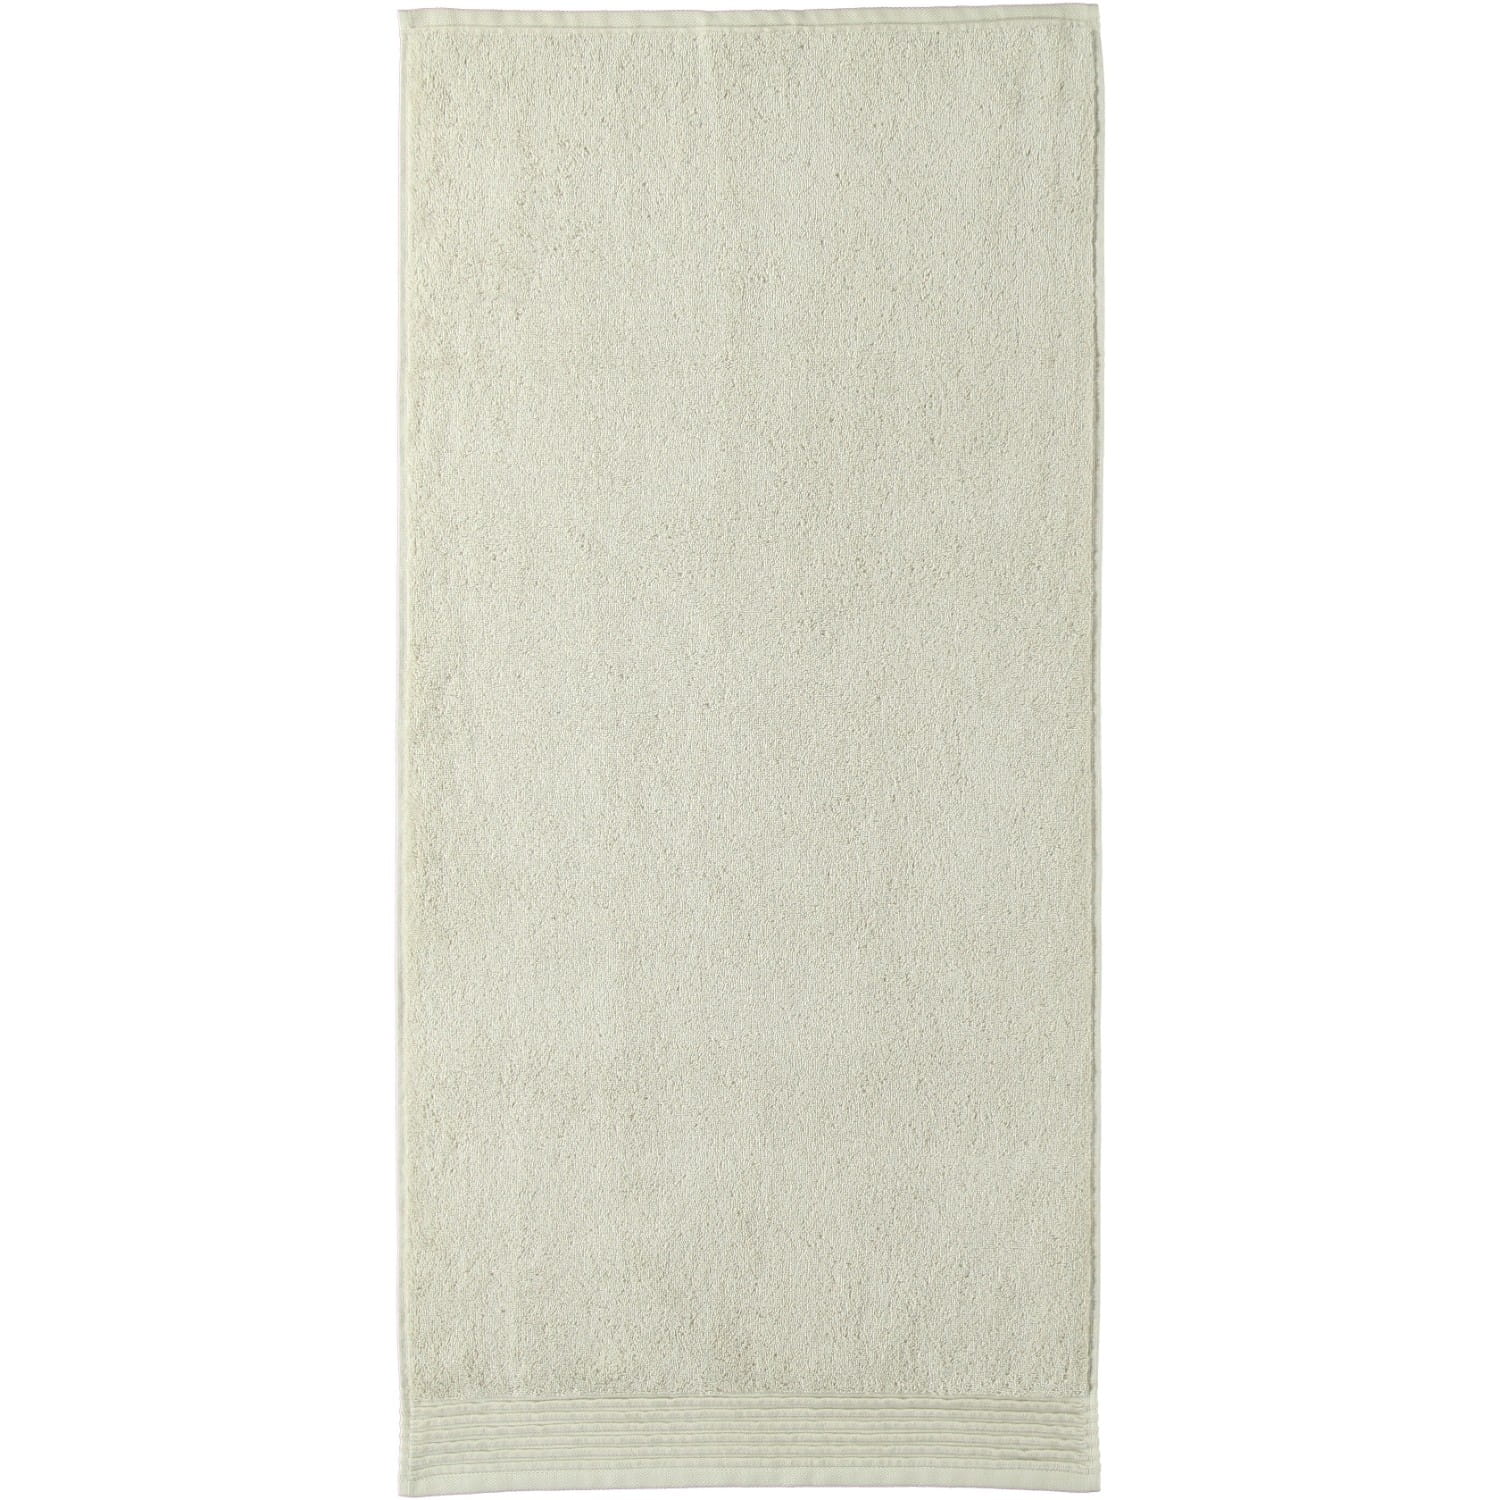 Möve - LOFT - Farbe: papyrus - 714 (0-5420/8708) - Handtuch 50x100 cm |  Handtuch | Handtücher